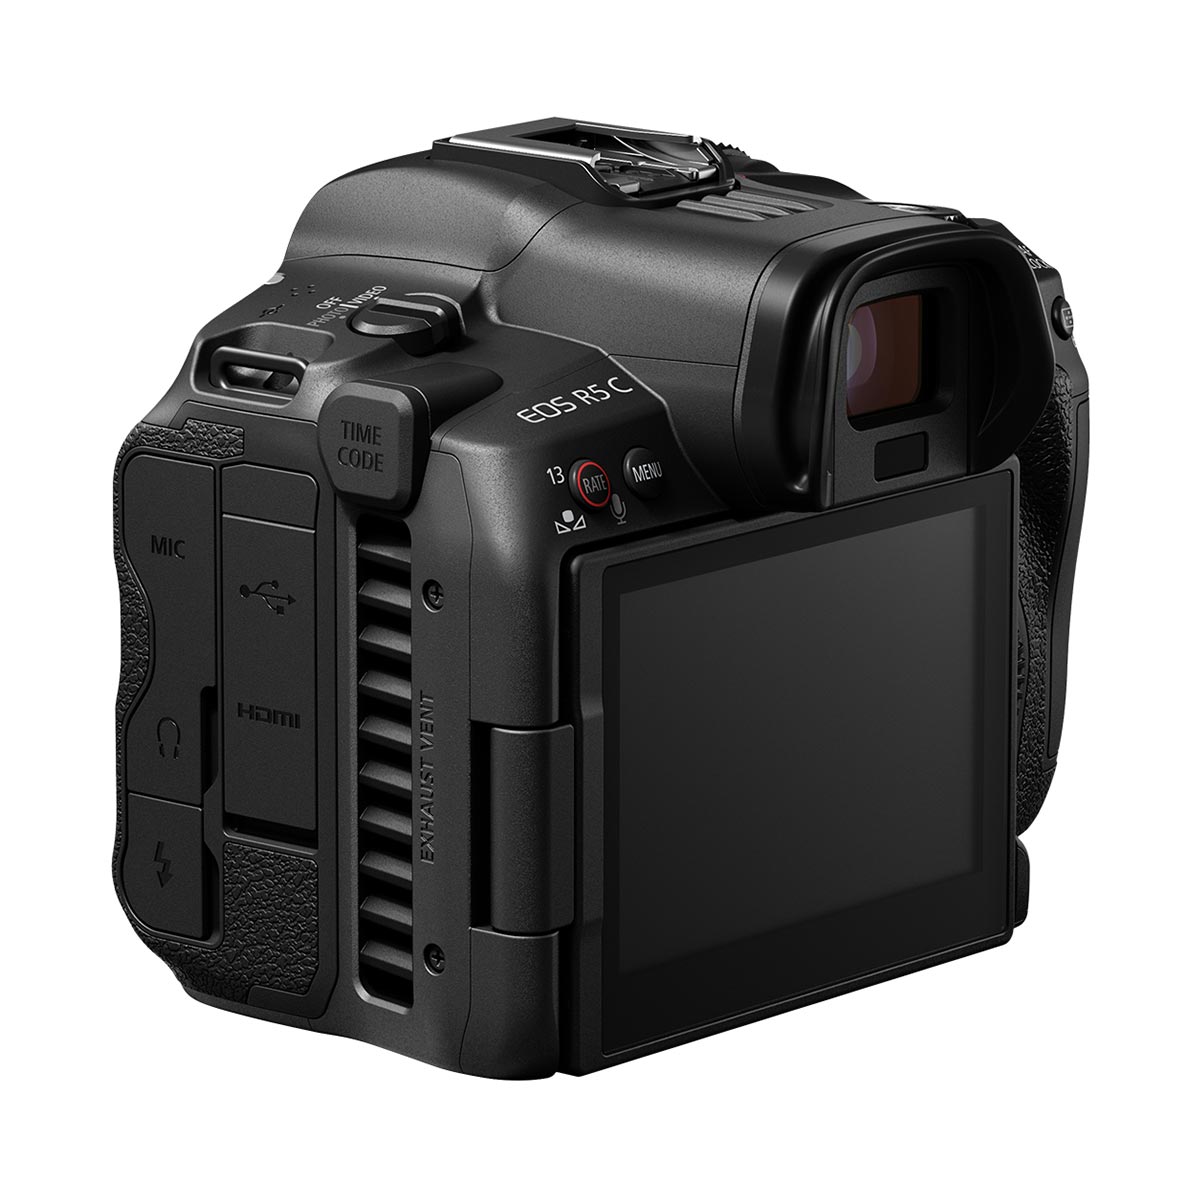 Canon EOS R5 C Mirrorless Cinema Camera Body